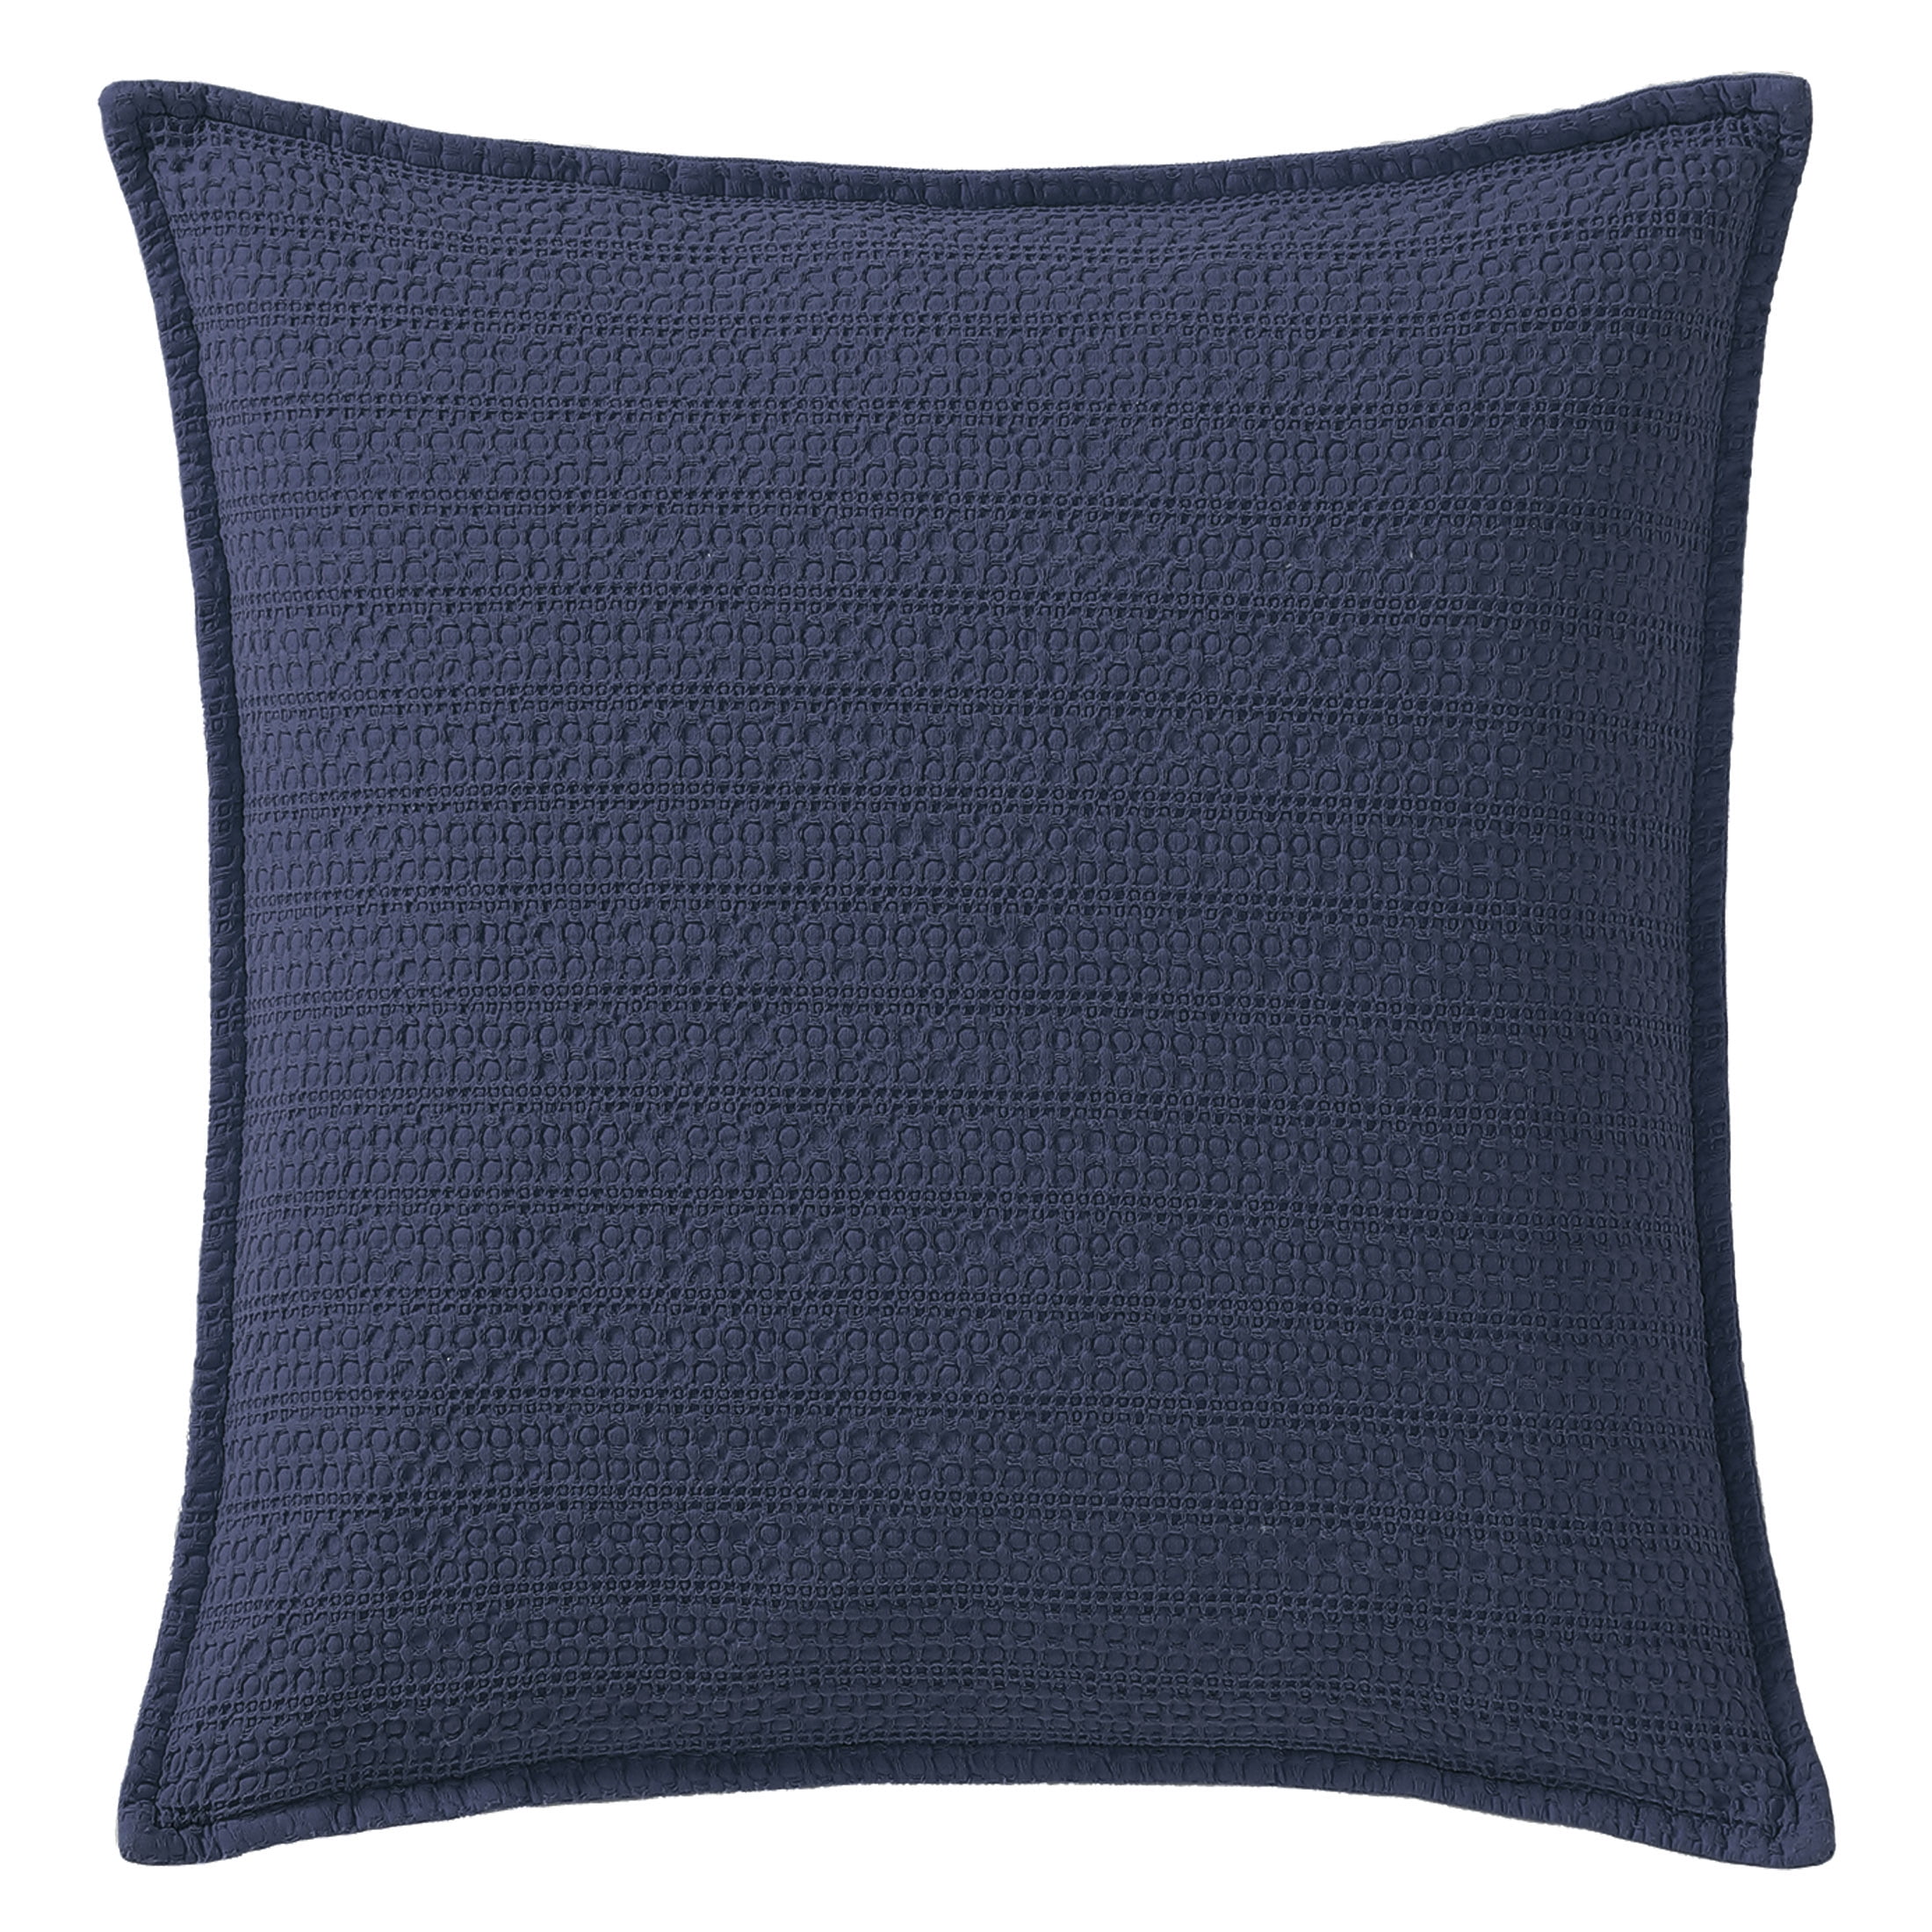 Mainstays, Renata Waffle Decorative Pillow, Square, 20" x 20", Navy, 1 Piece